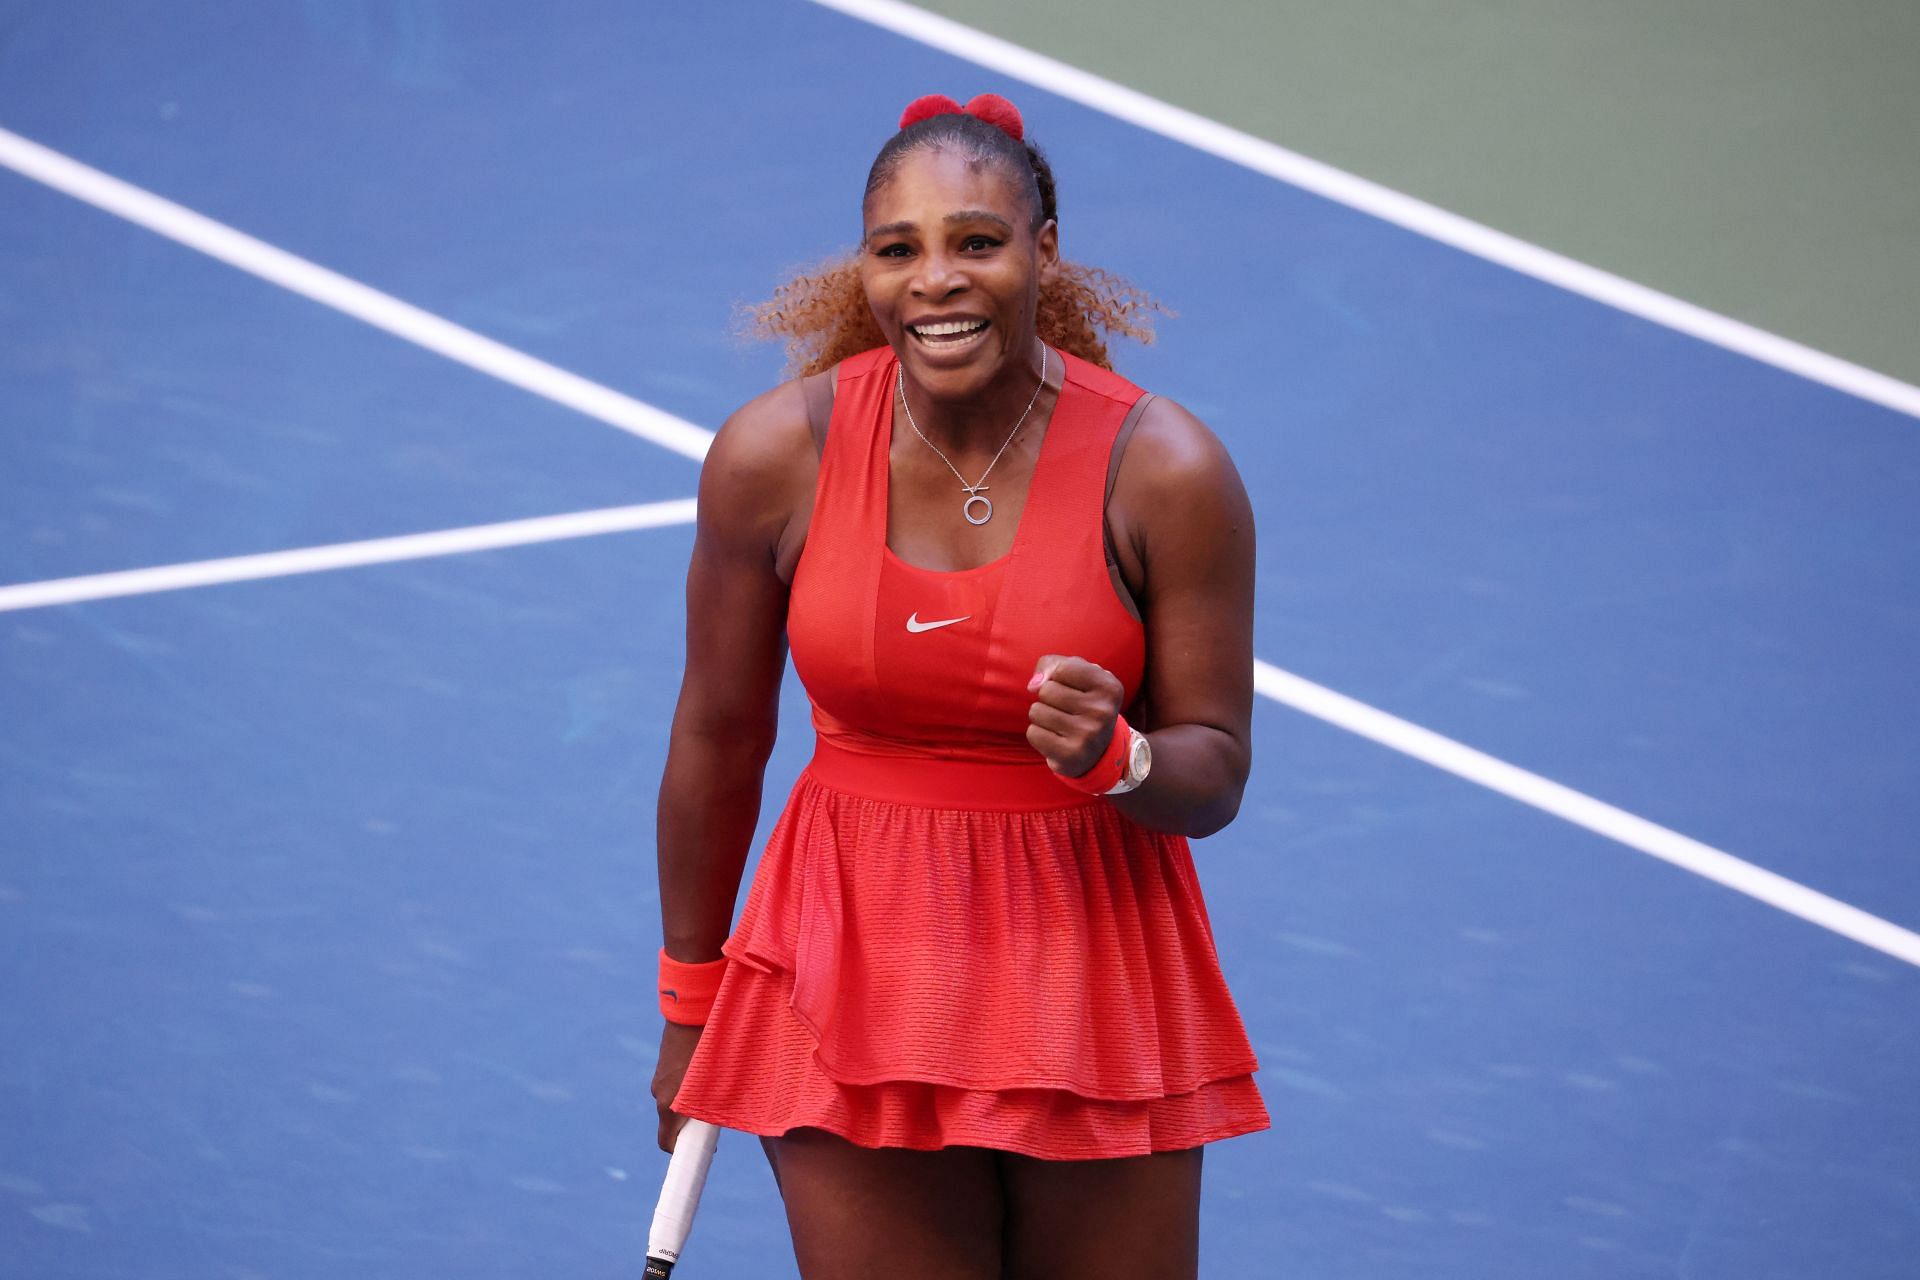 Serena Williams had a resurgence under Patrick Moratoglou